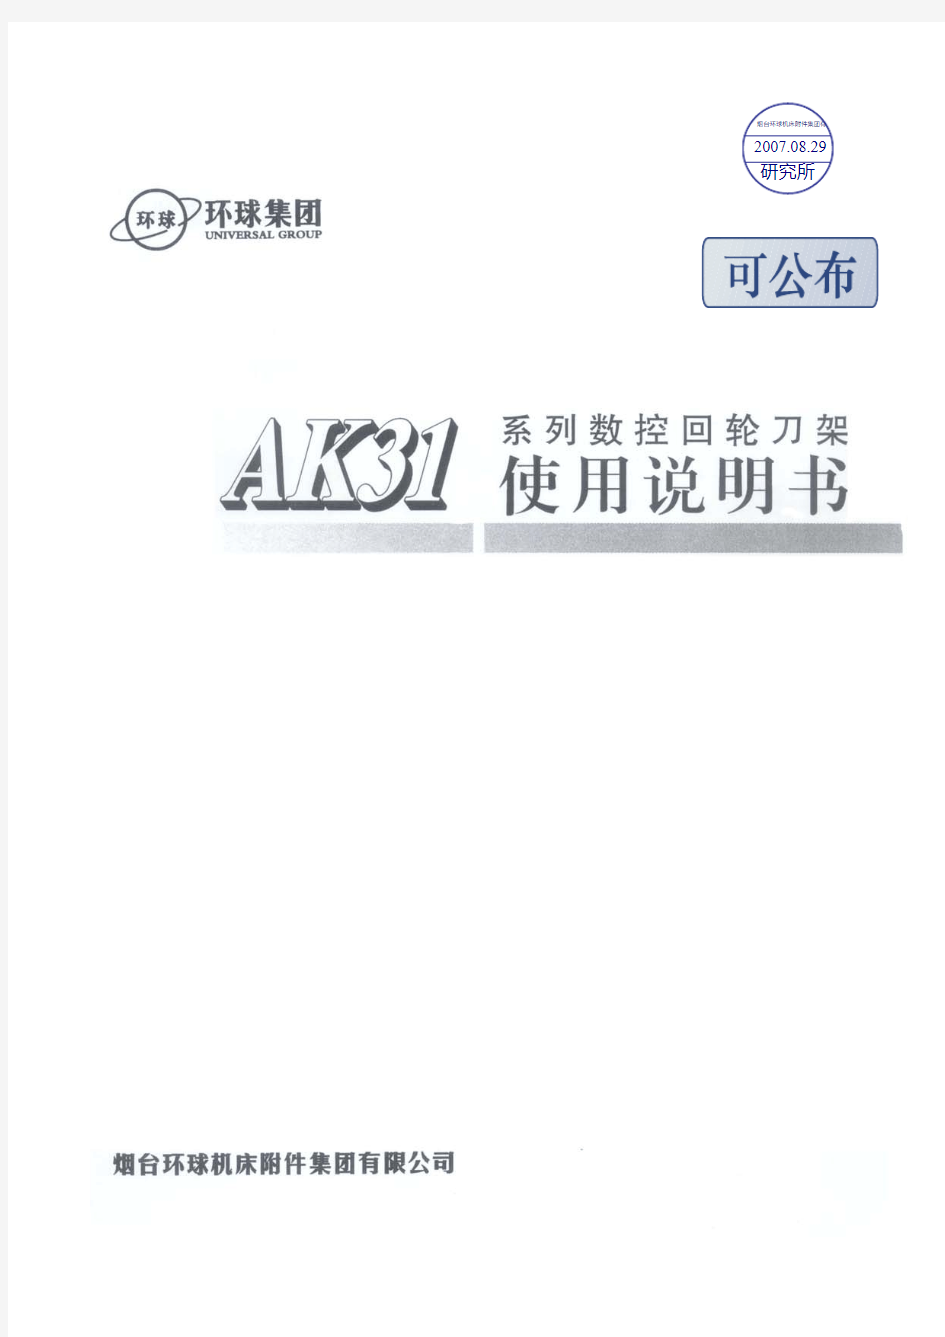 AK31系列数控回轮刀架使用说明书(中文)